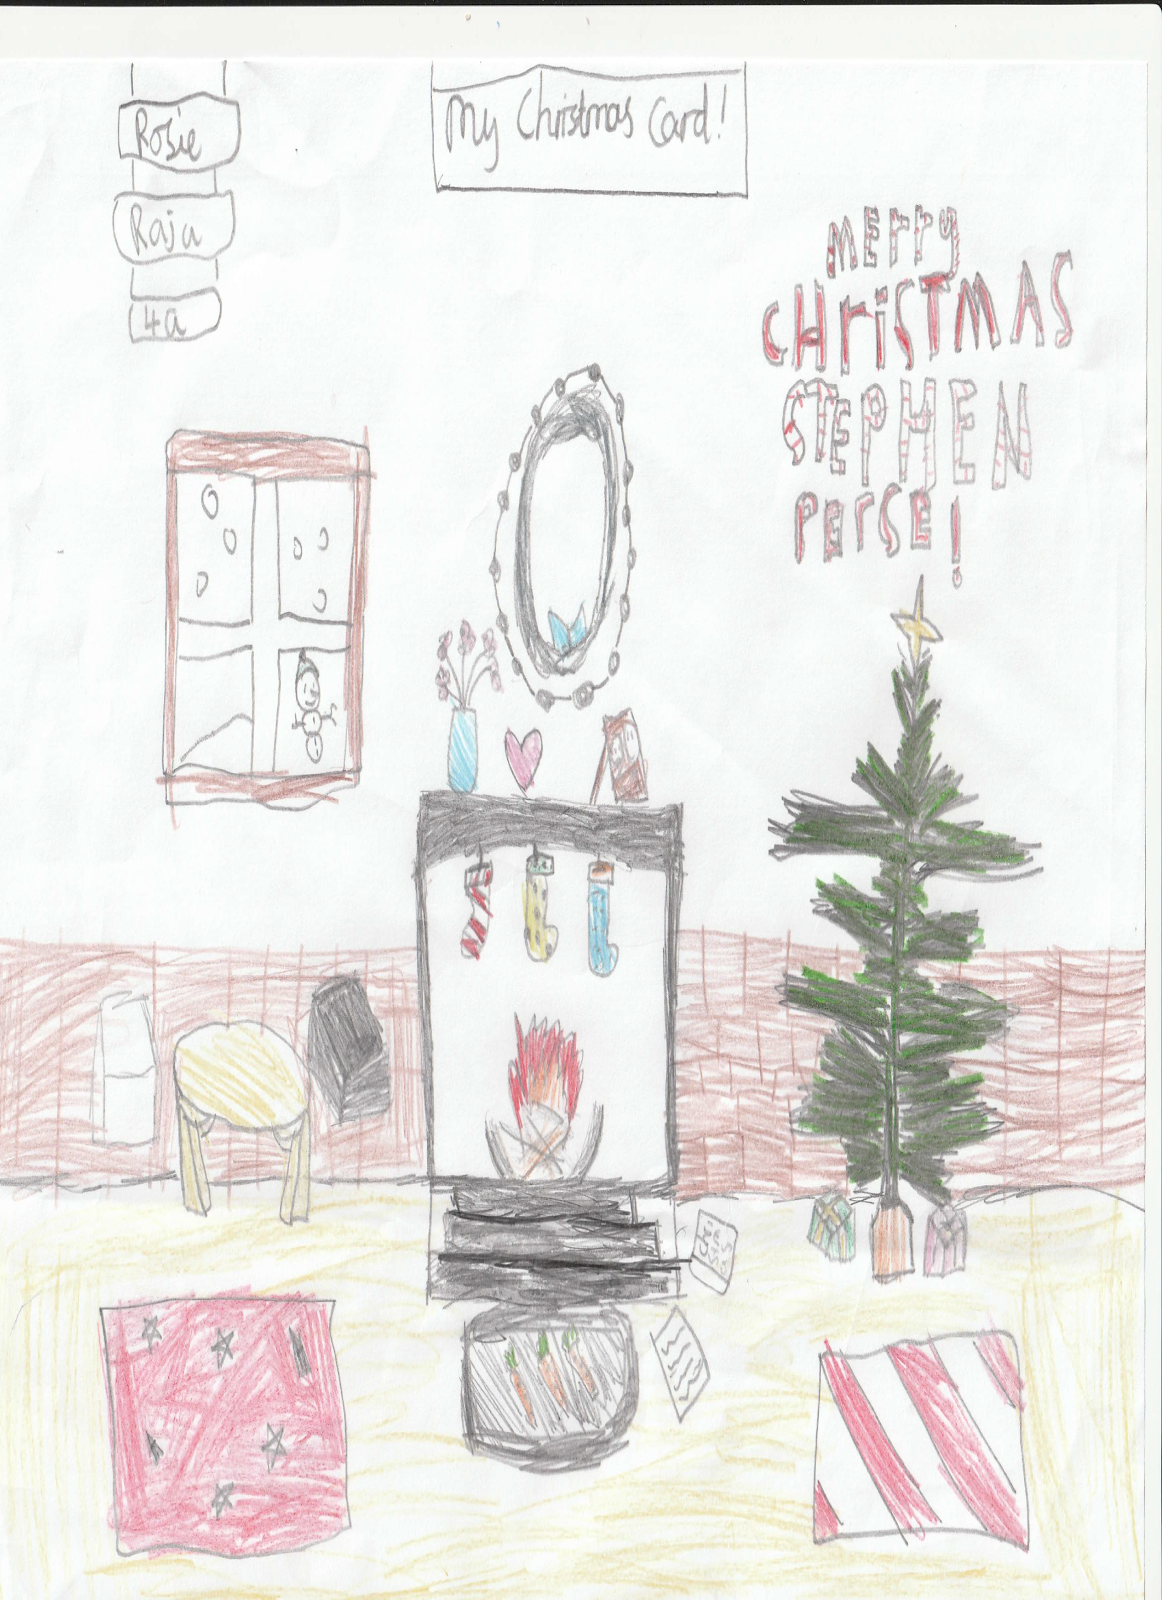 Rosie R - Year 4 Christmas card design winner